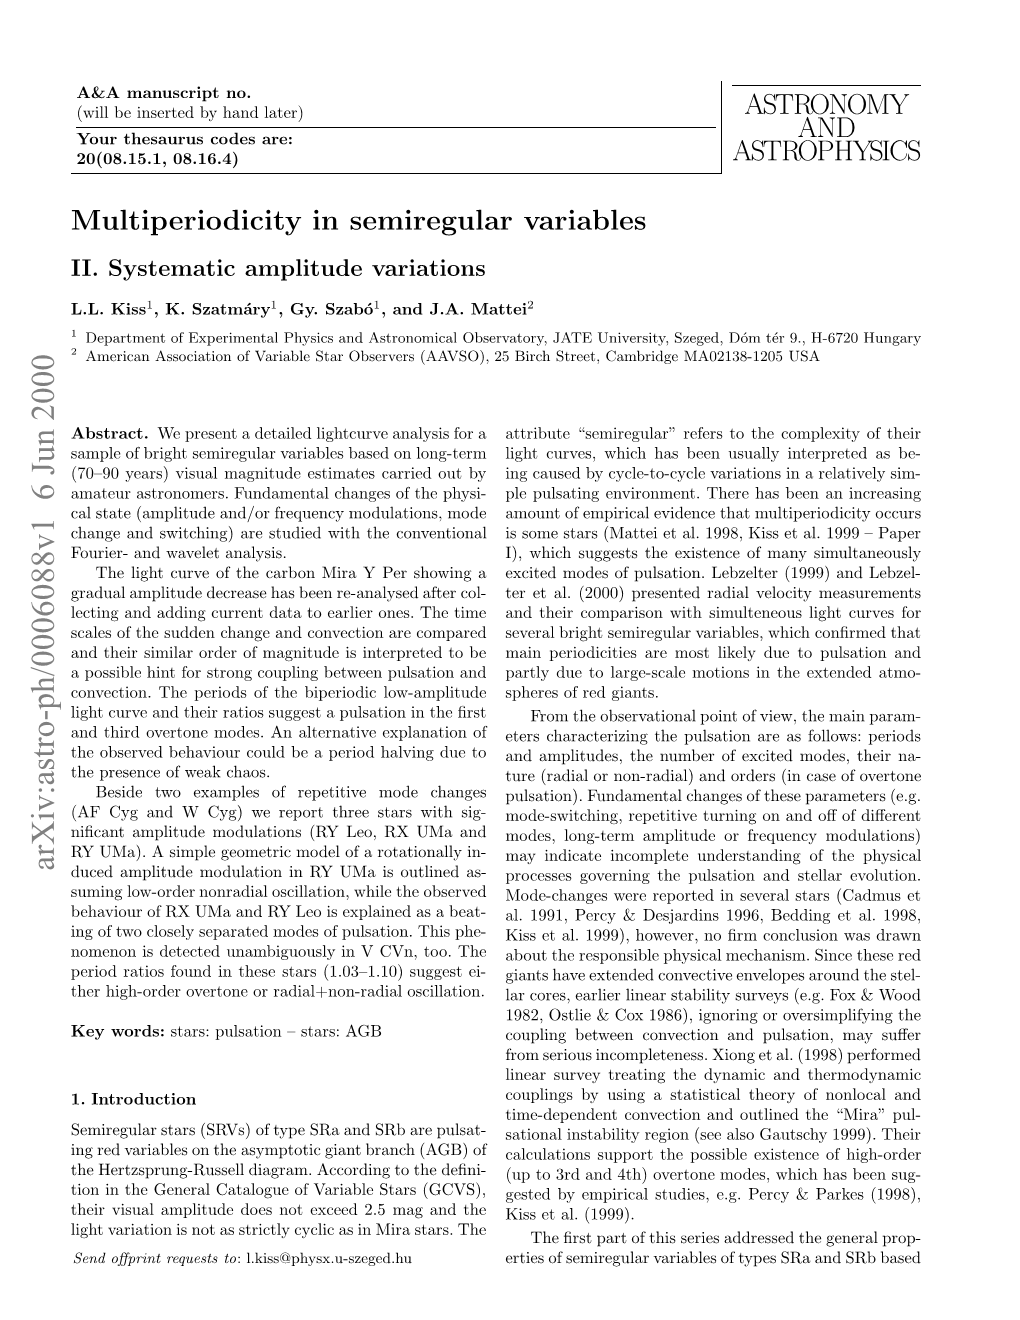 Multiperiodicity in Semiregular Variables II. Systematic Amplitude